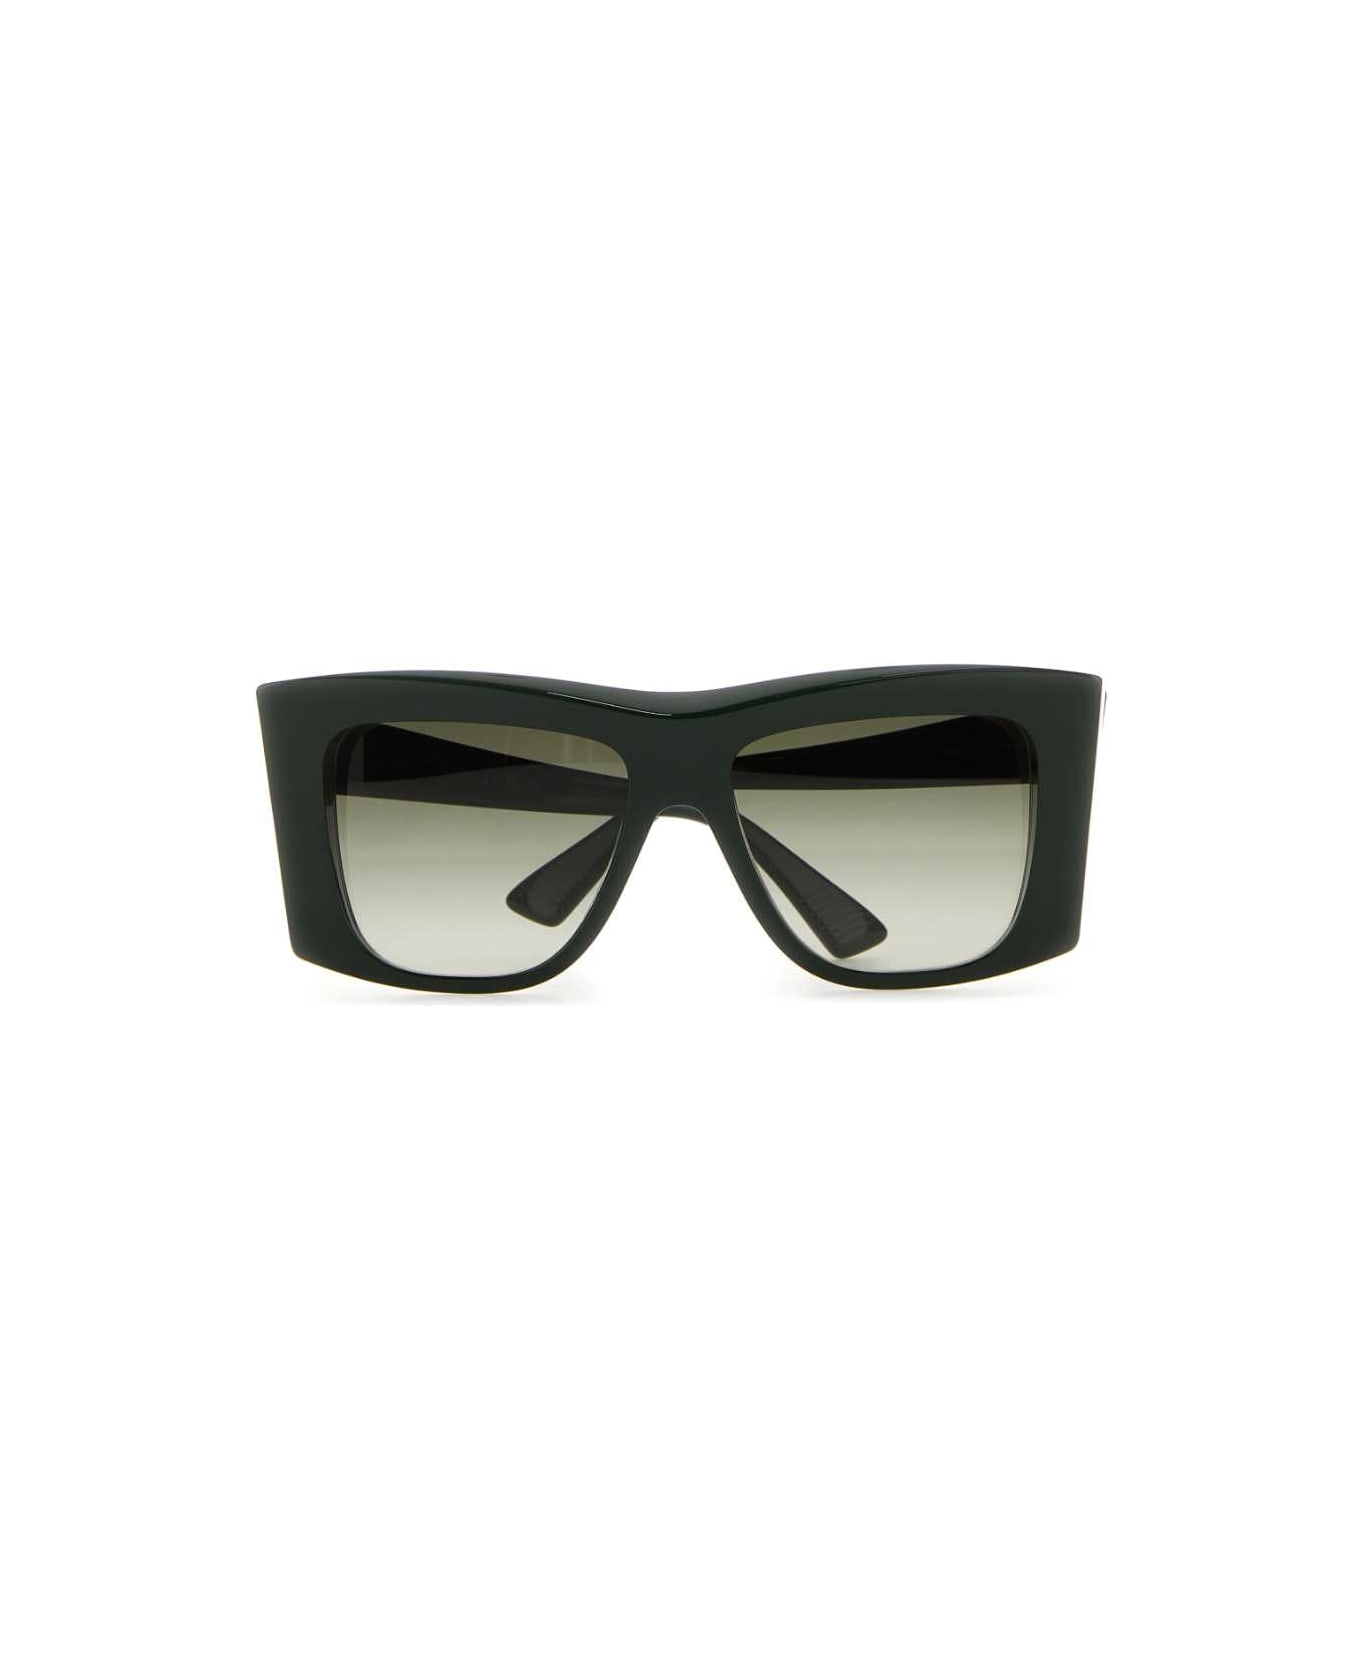 Bottega Veneta Black Acetate Sunglasses - GREENGREEN